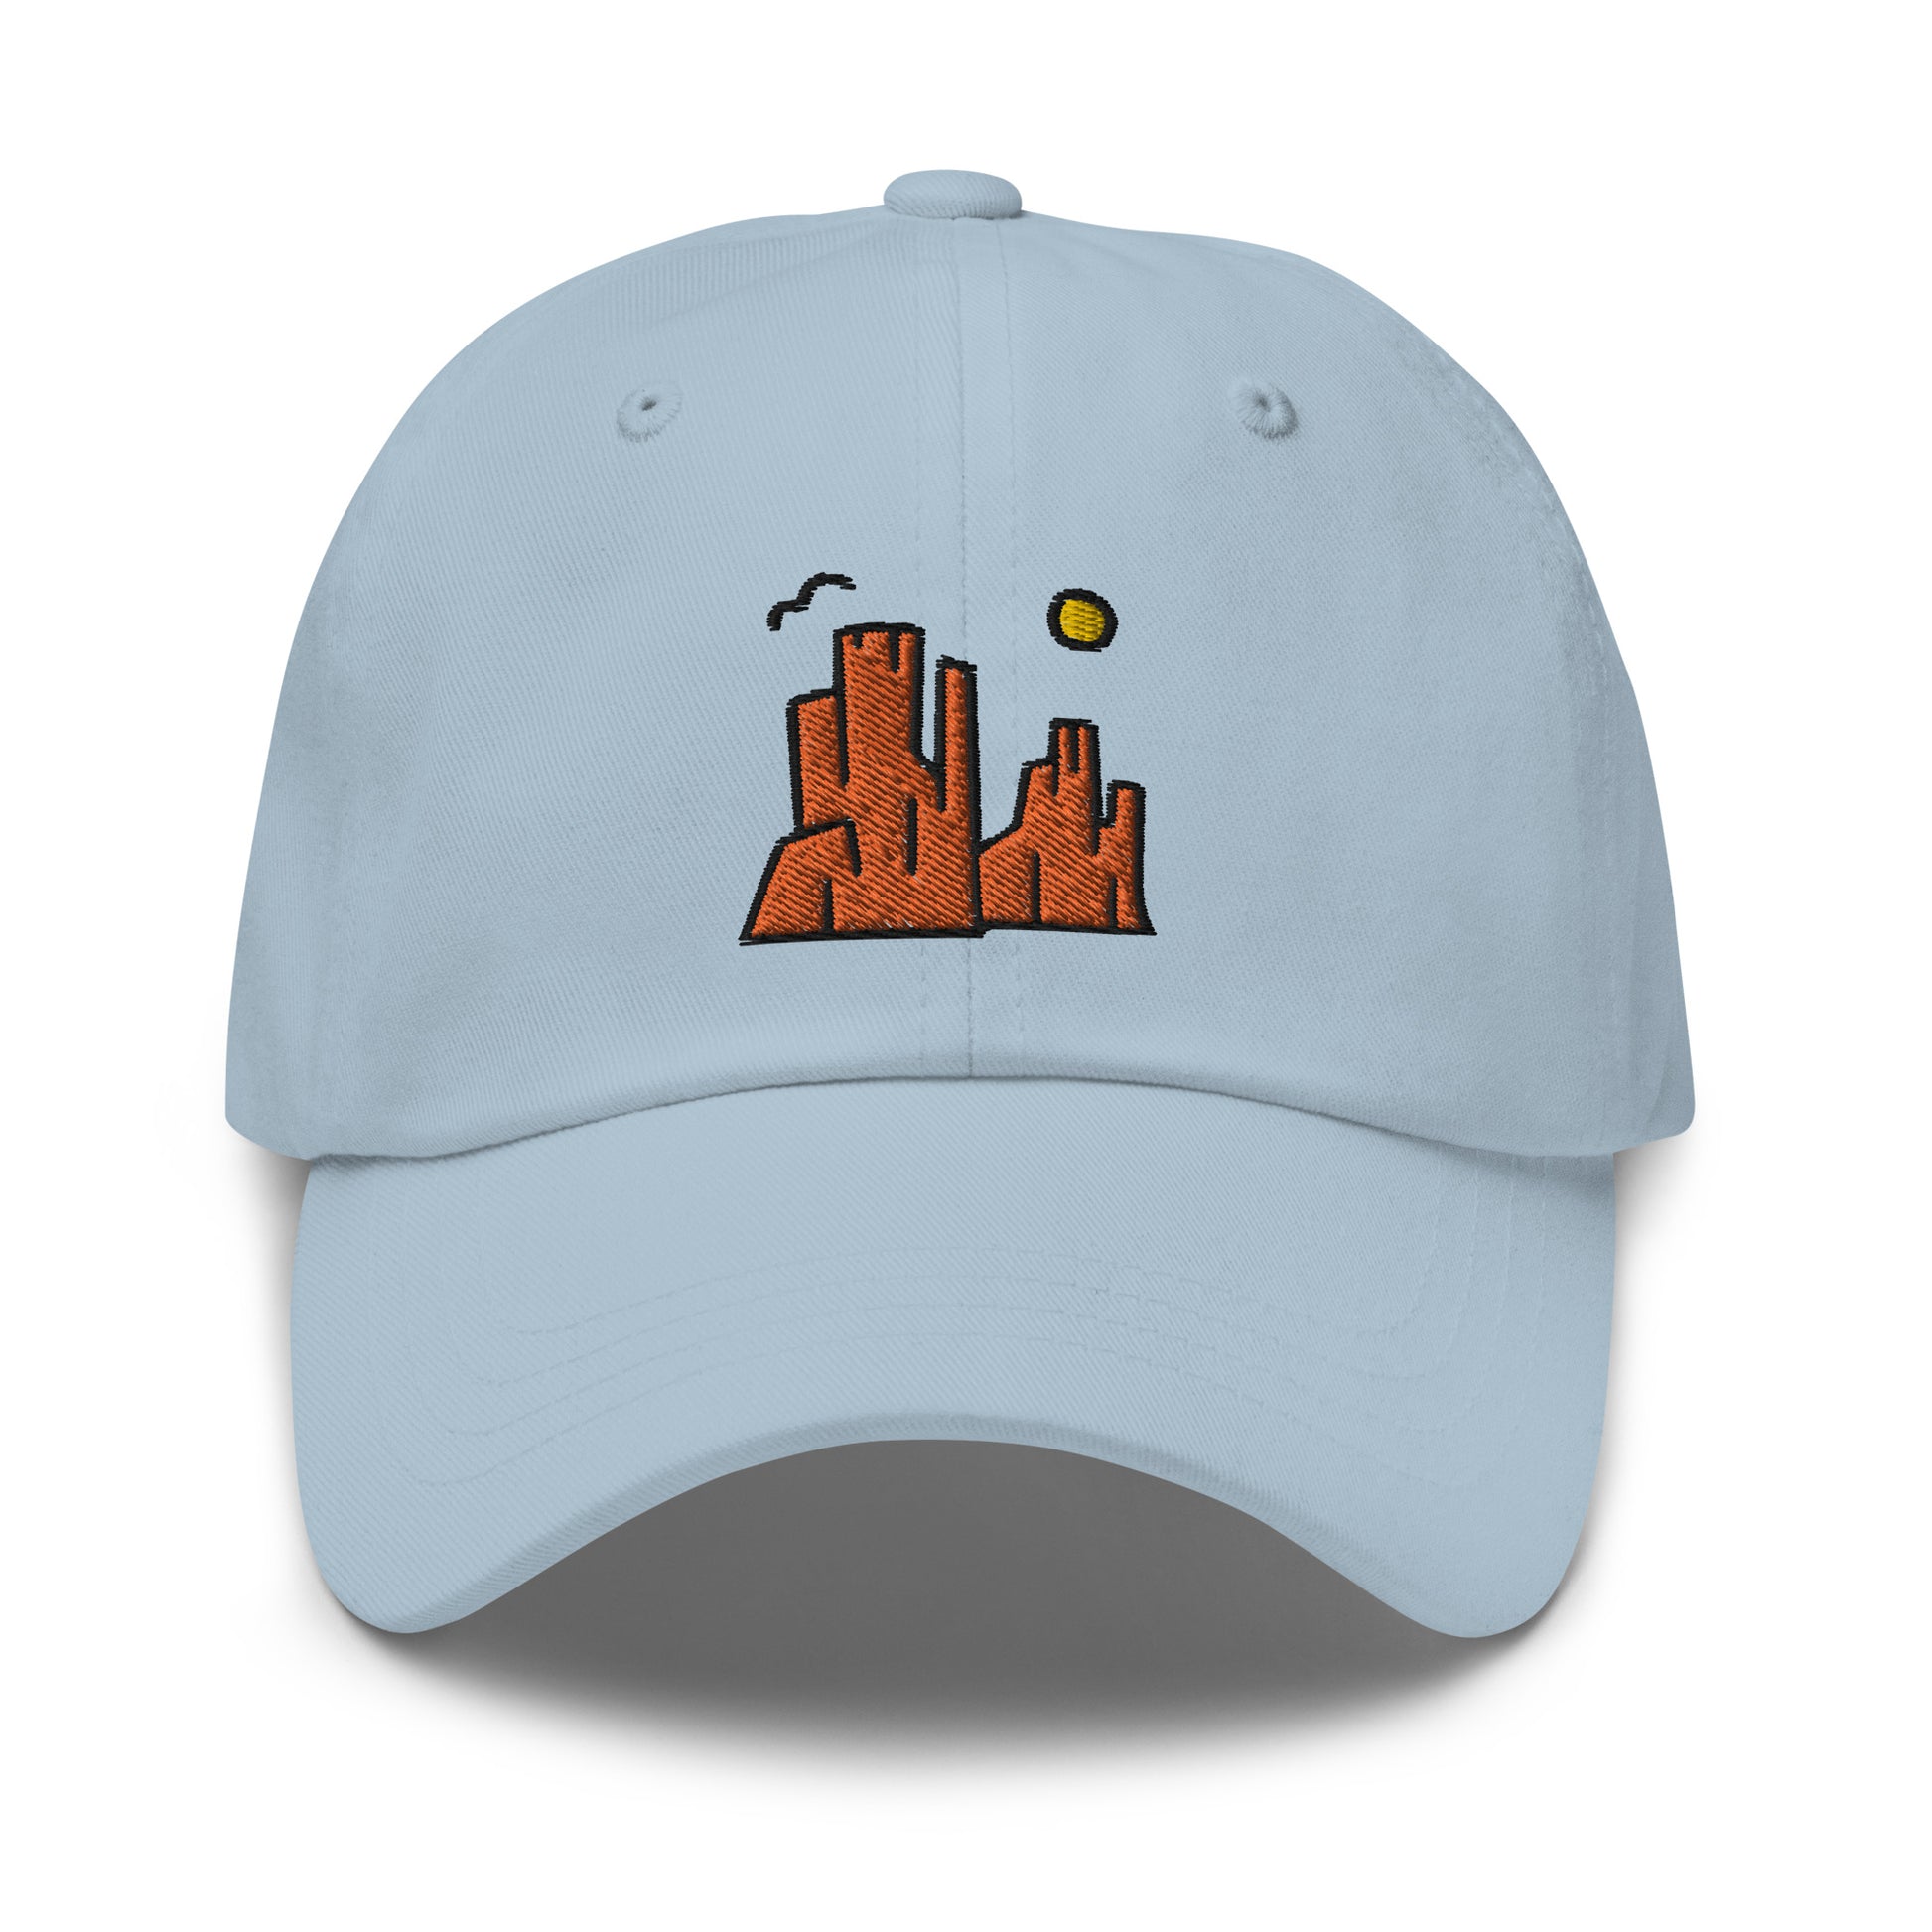 cap ballcap utah red rocks climb outside sun nature desert mountain landscape cap wear summer